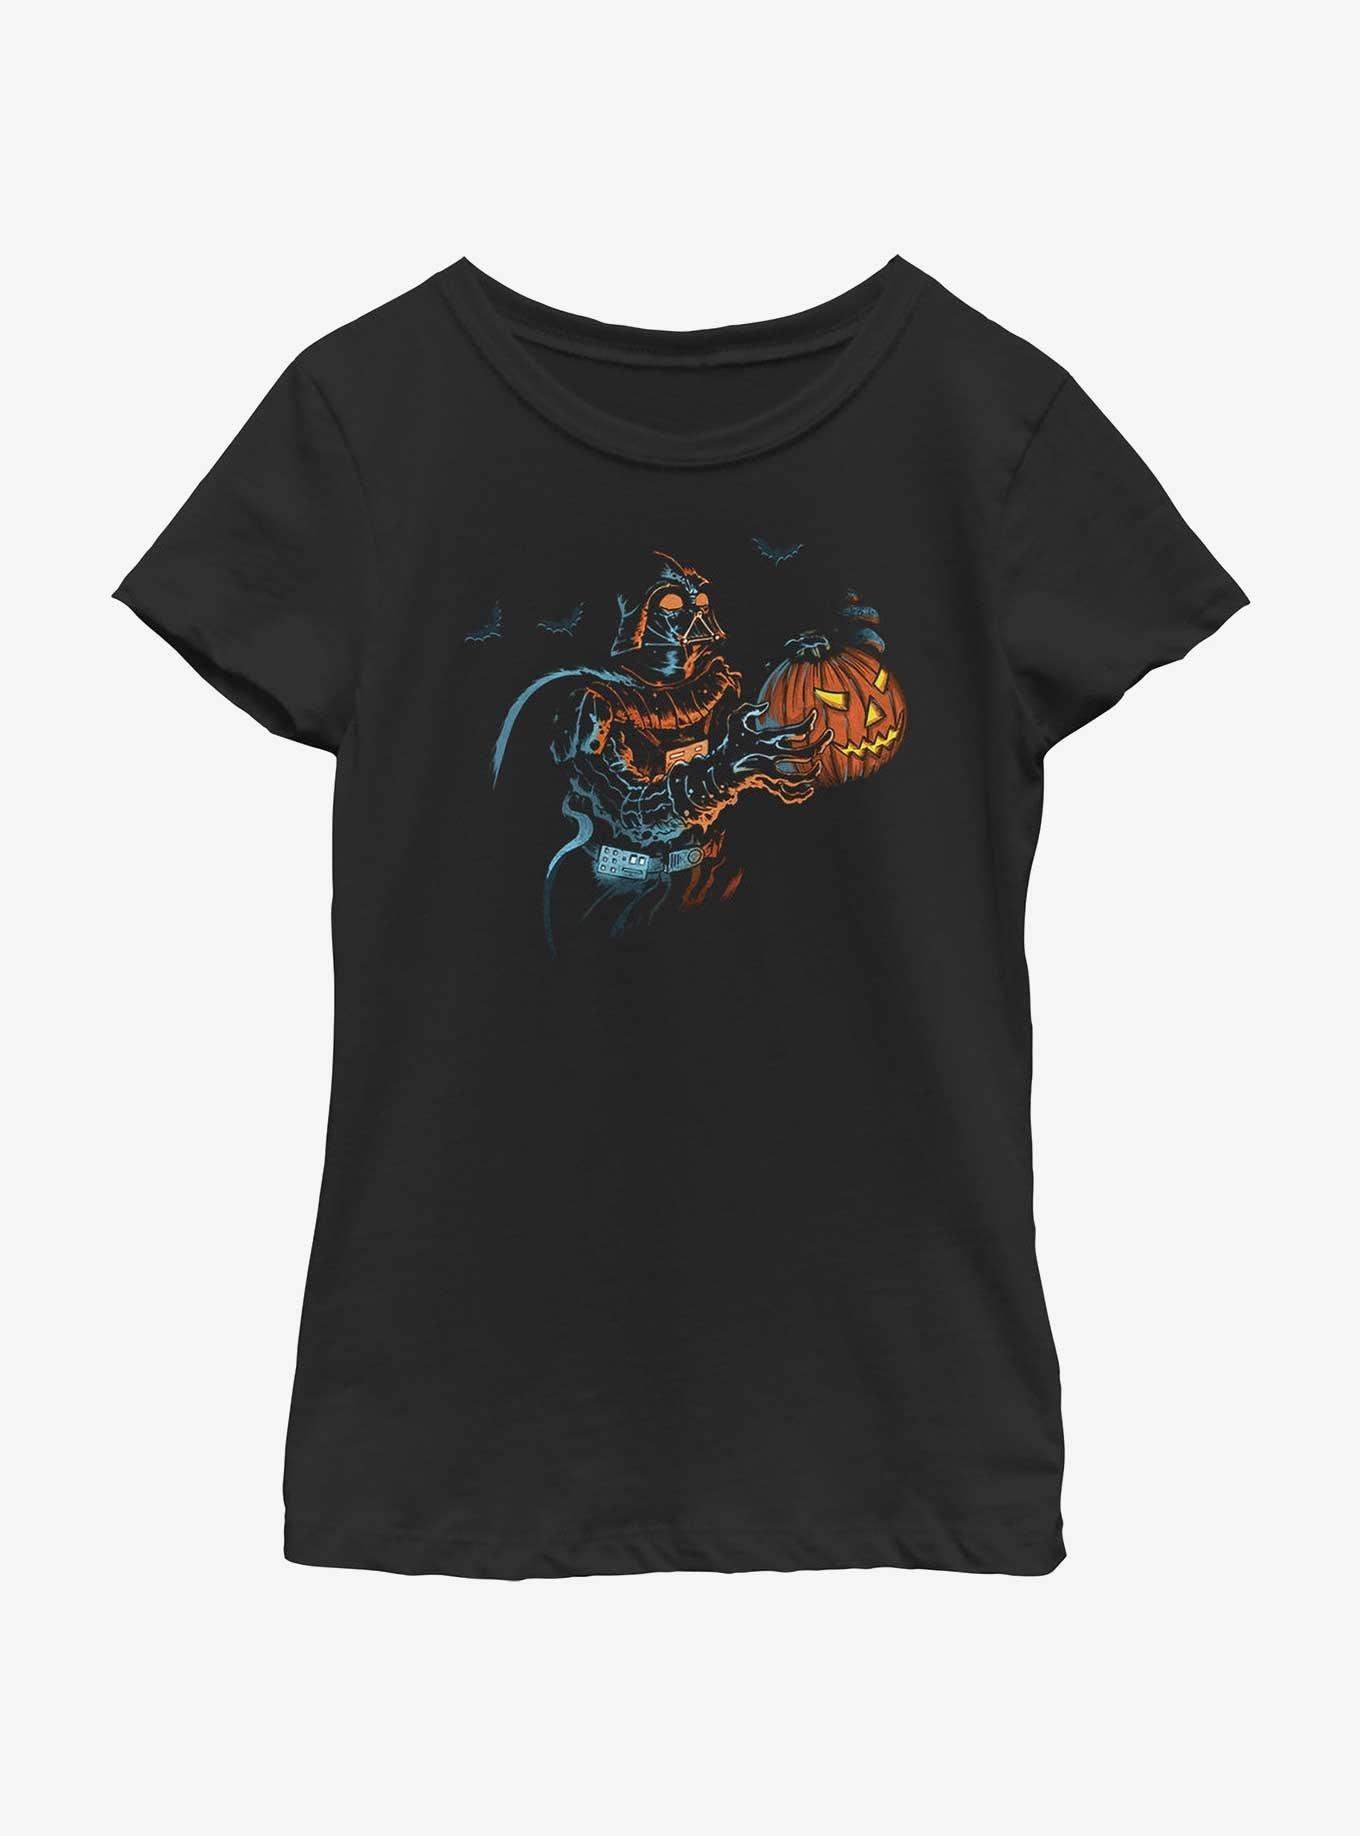 Star Wars Spooky Darth Vader Youth Girls T-Shirt, BLACK, hi-res